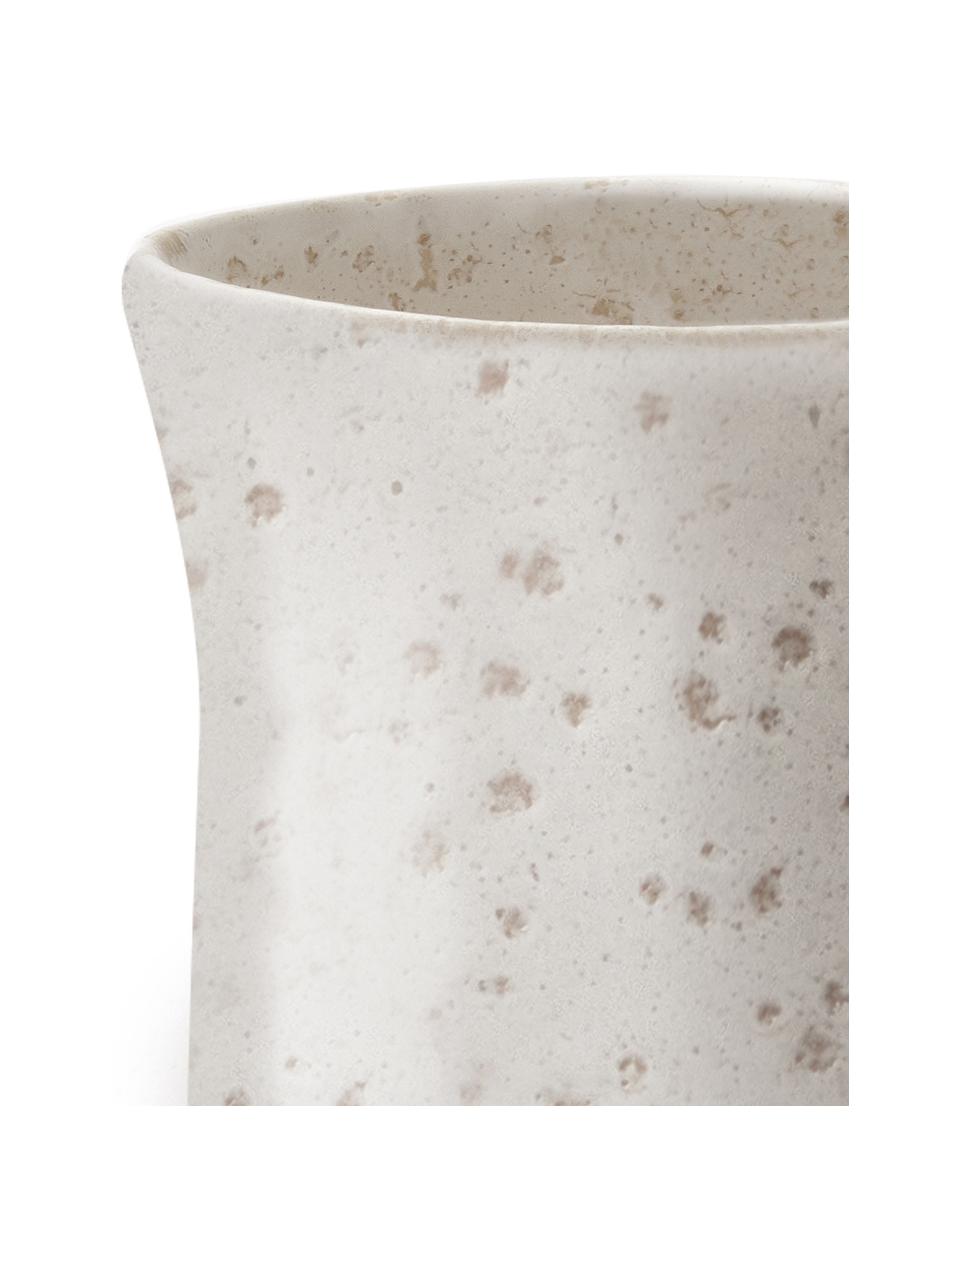 Brocca latte in gres bianco Elegant, 200 ml, Gres, Bianco, Ø 7 x Alt. 13 cm